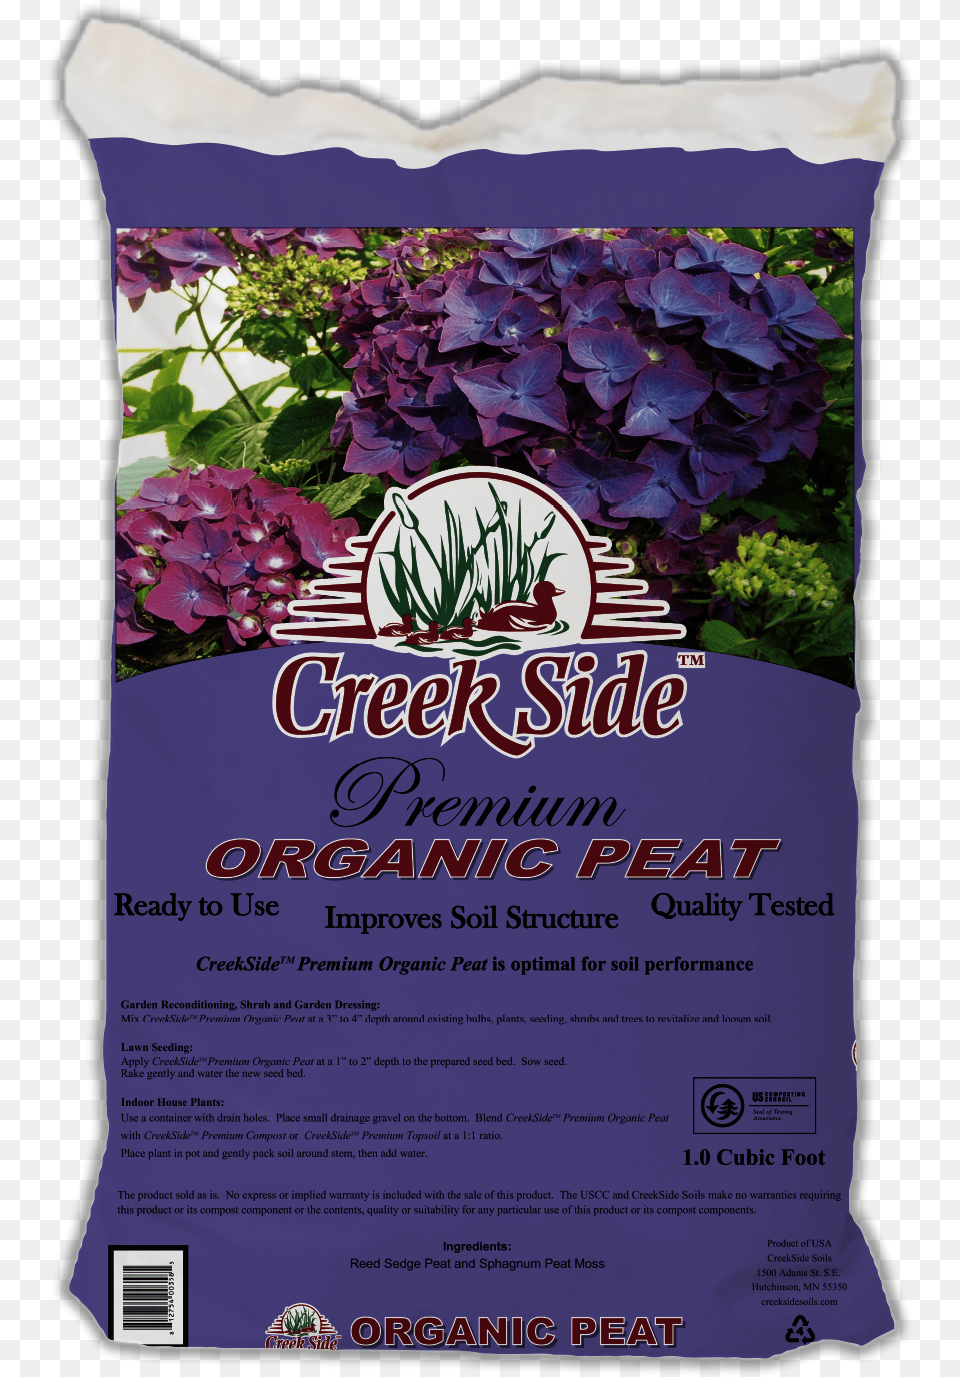 Creekside Bag Of Premium Organic Peat, Advertisement, Poster, Plant, Flower Png